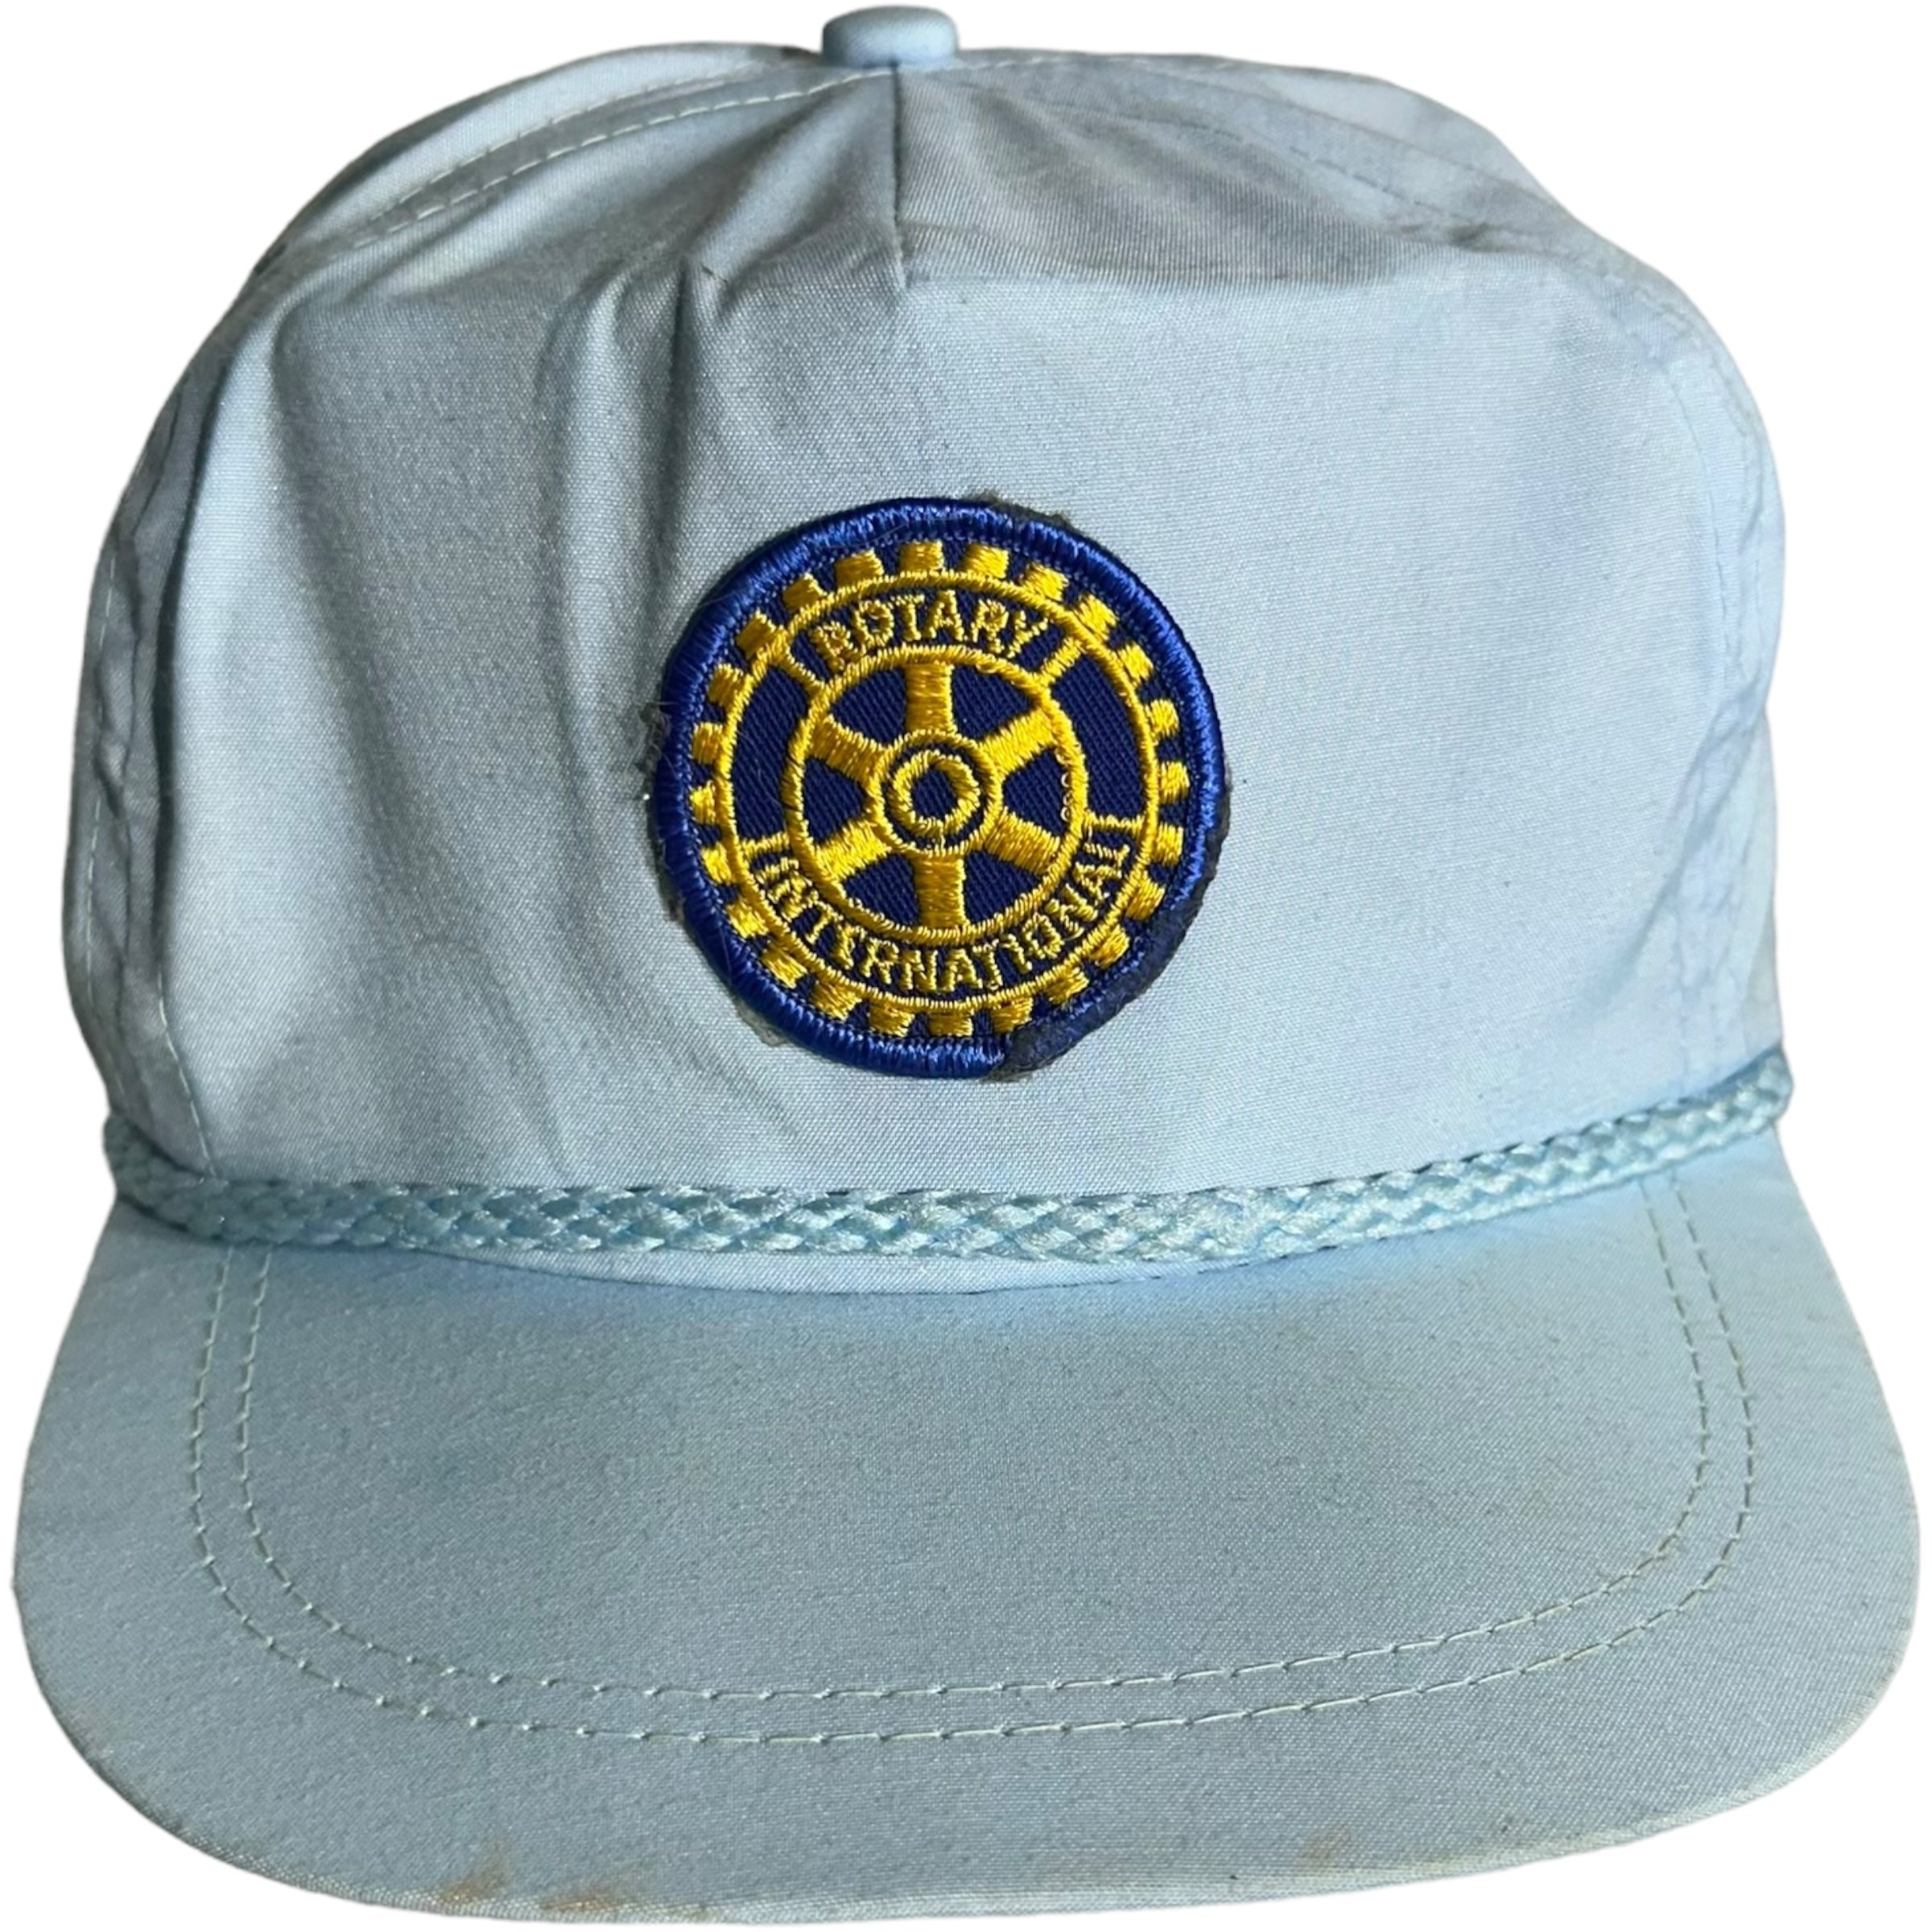 Vintage Rotary International Rope Lace Strapback Hat